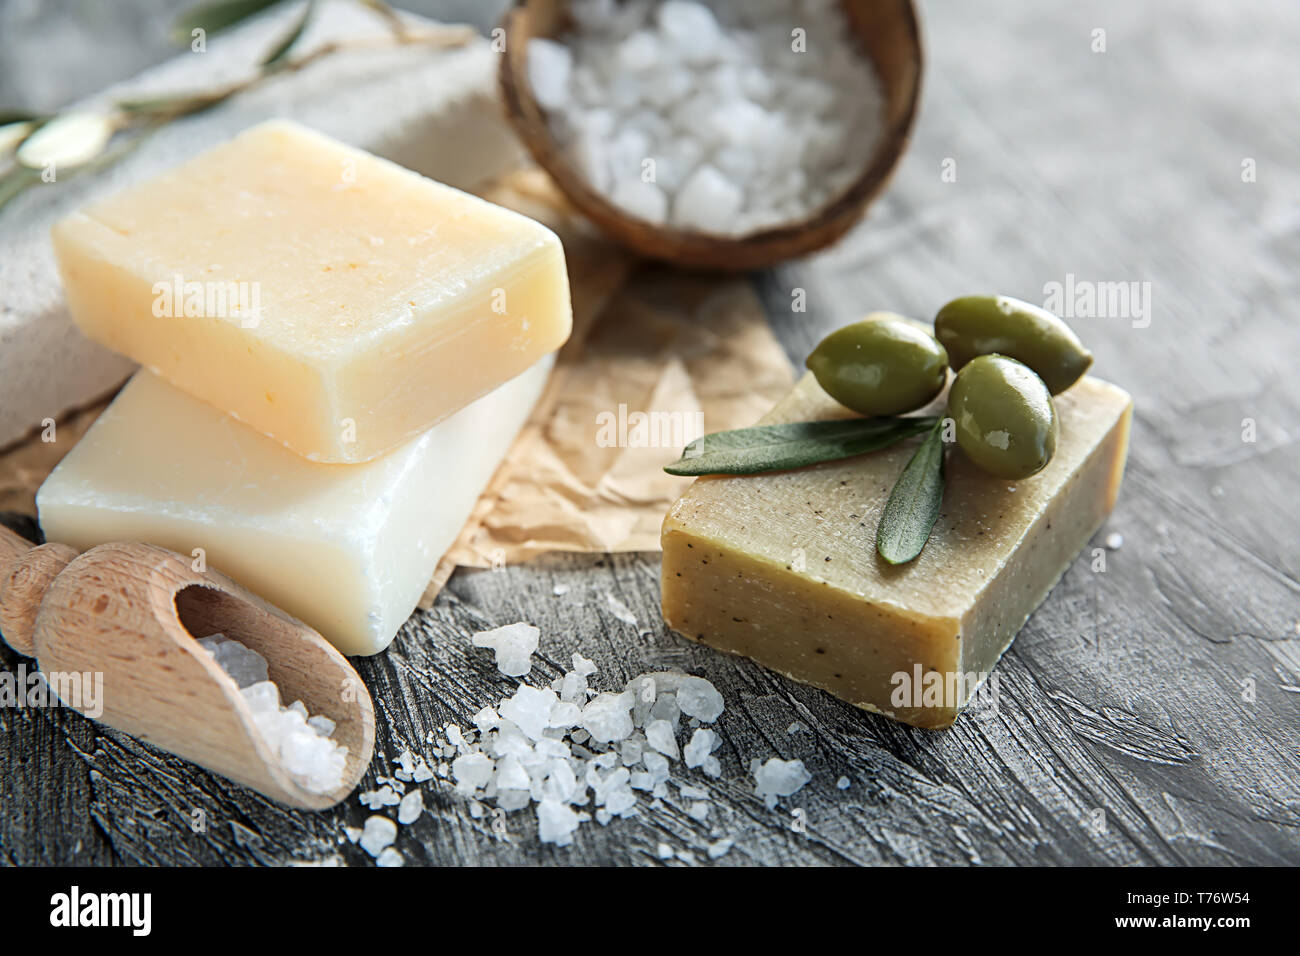 Olive Oil Organic Soap